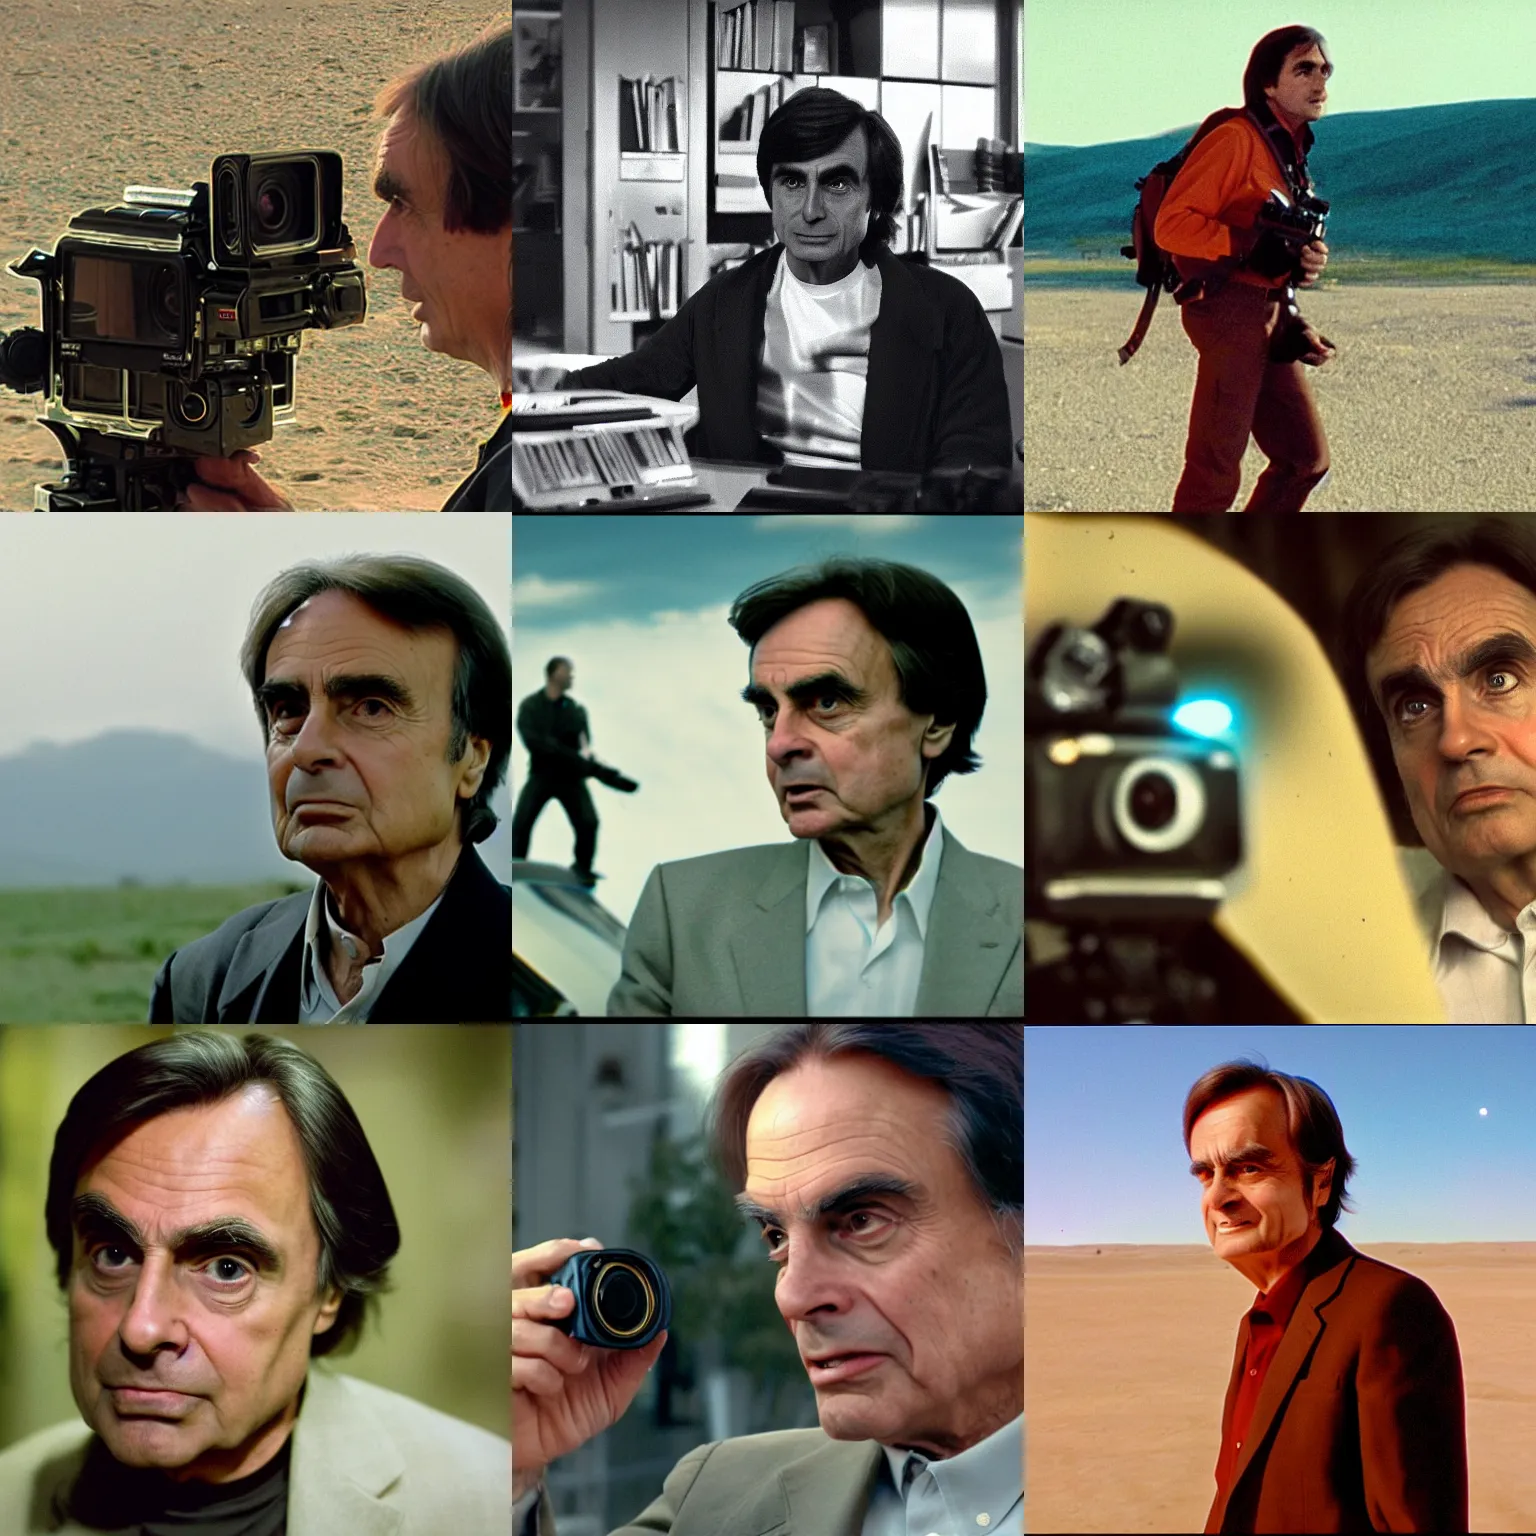 Prompt: action film camera still of Carl Sagan, figure portrait